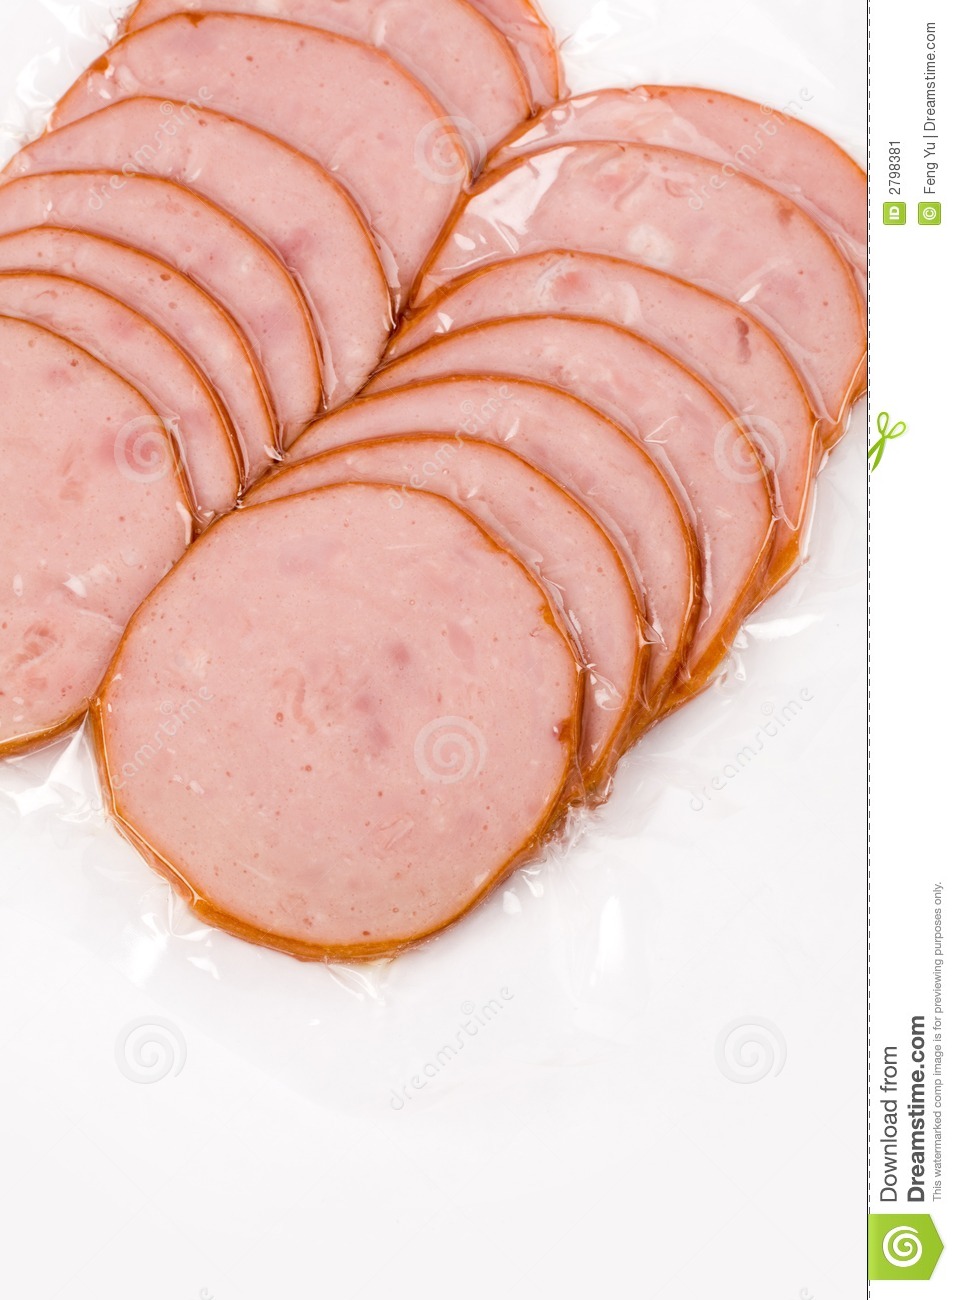 Ham Slices Stock Image   Image  2798381